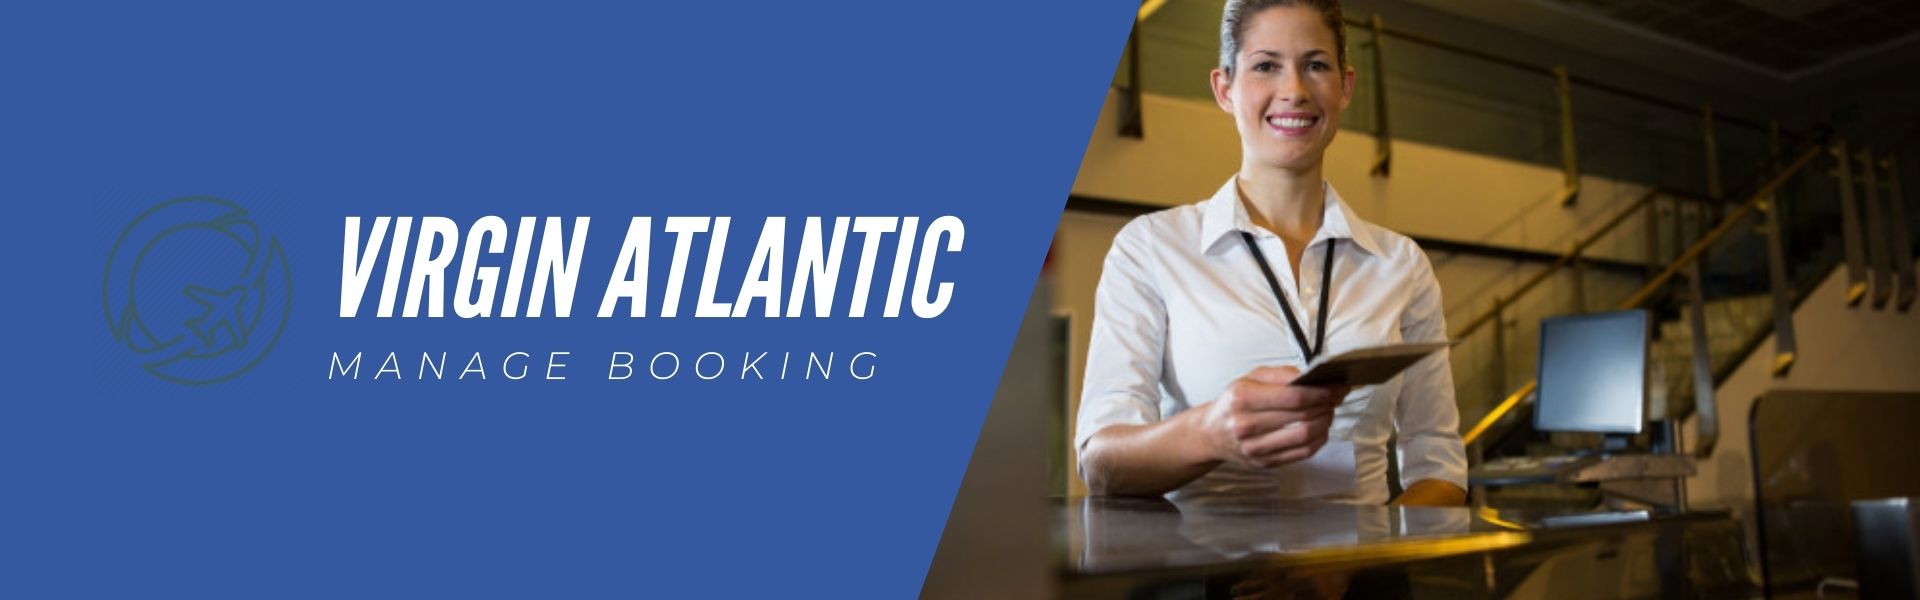 2020-10-06-10-13-07virgin Atlantic manage booking